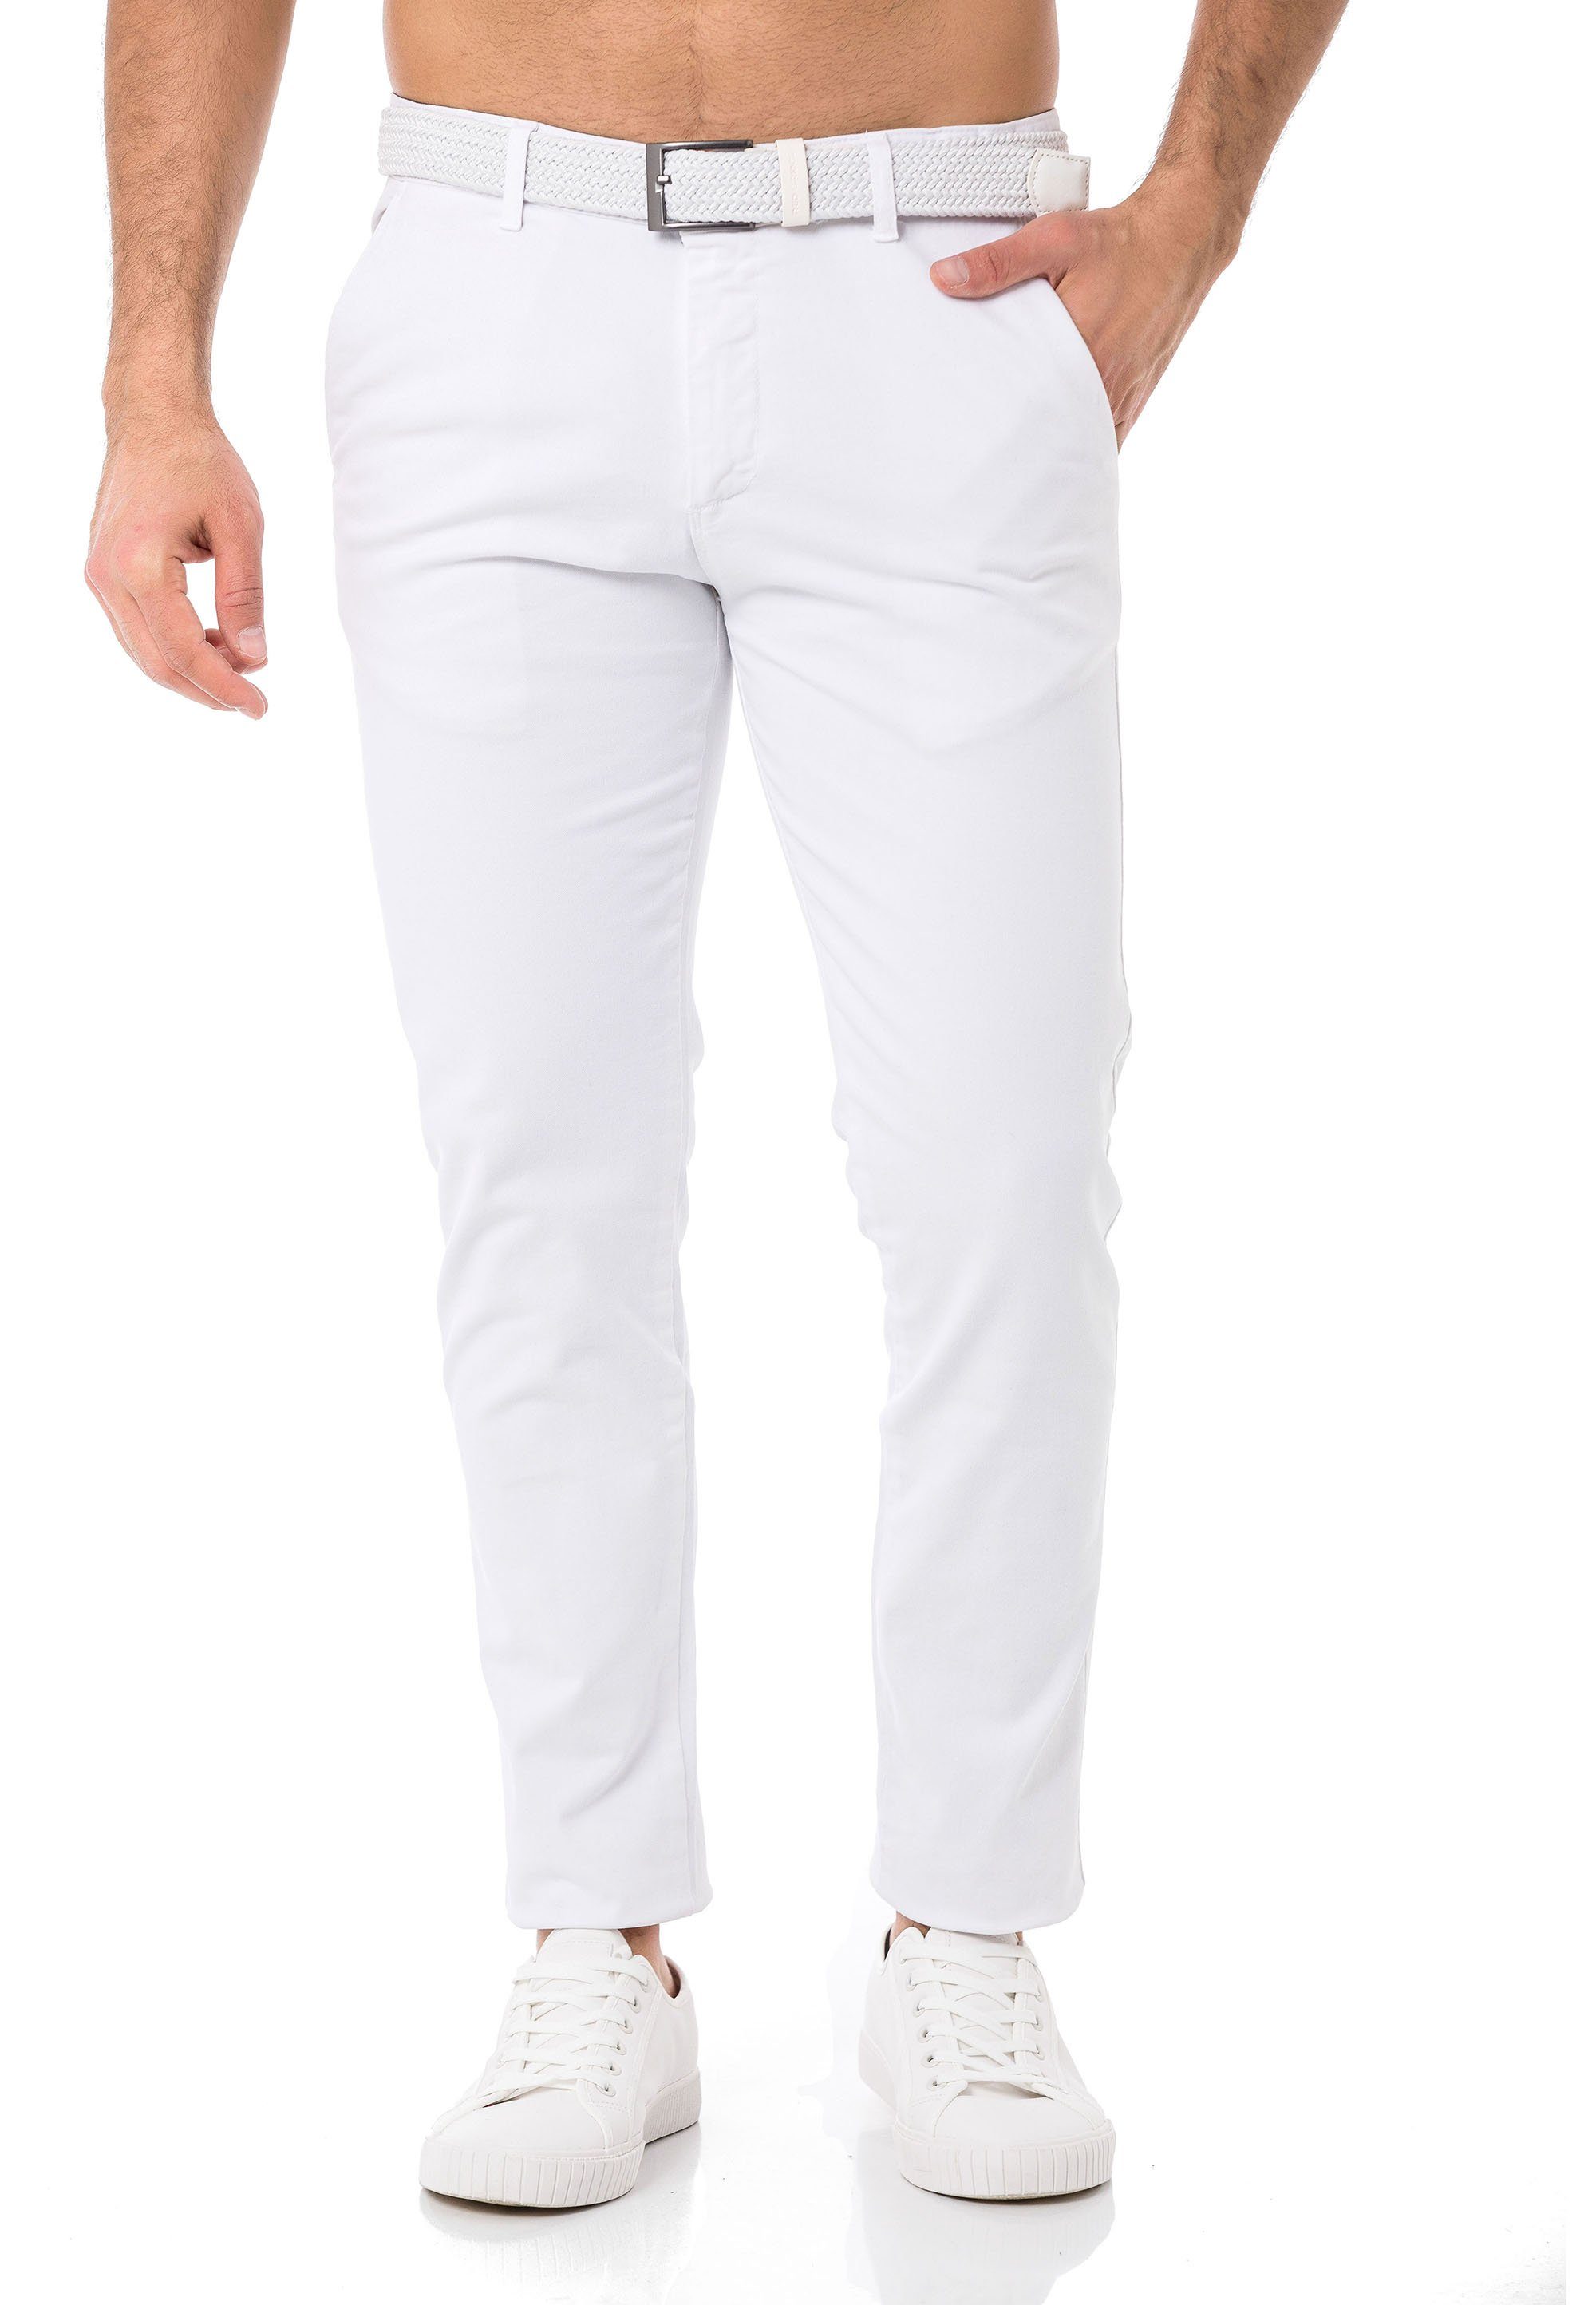 RedBridge Chinohose Chino Hose Pants mit Gürtel Weiß W33 L32